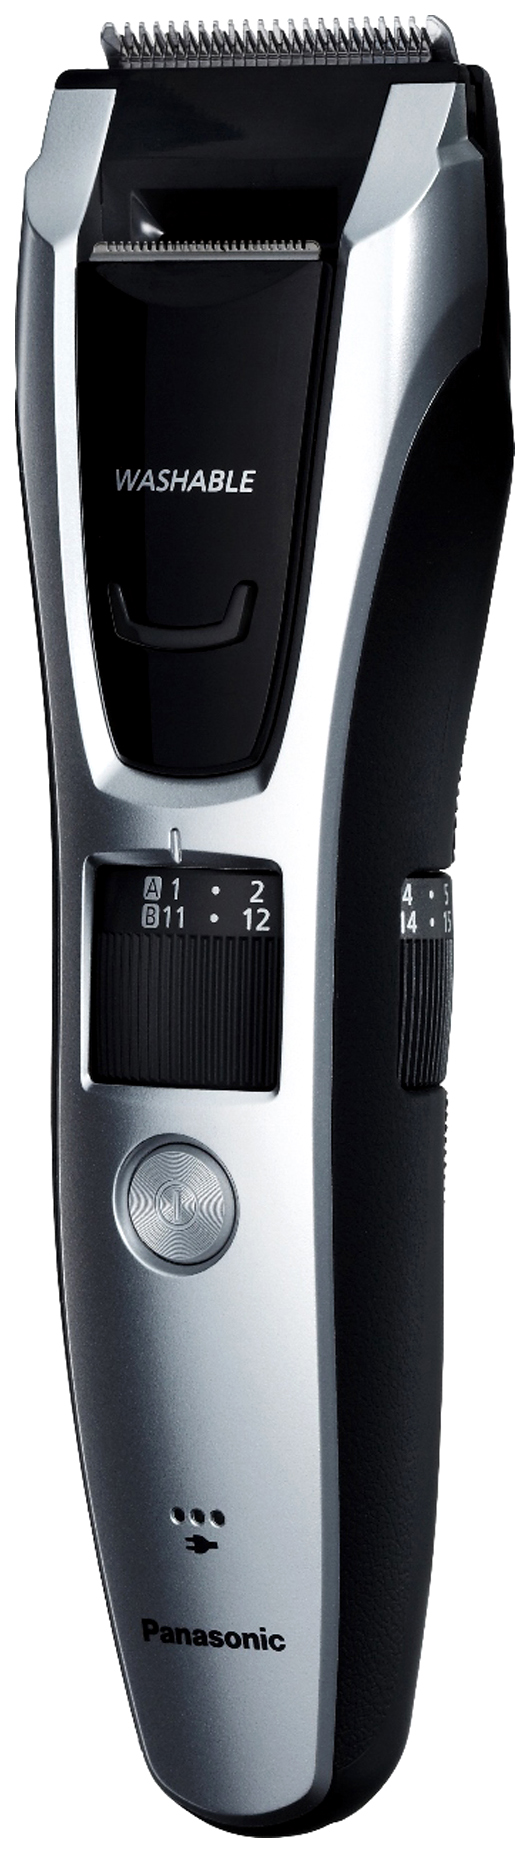 Бритва Panasonic ER-GB70-S520 серебристый бритва panasonic er gb70 s520 серебристый